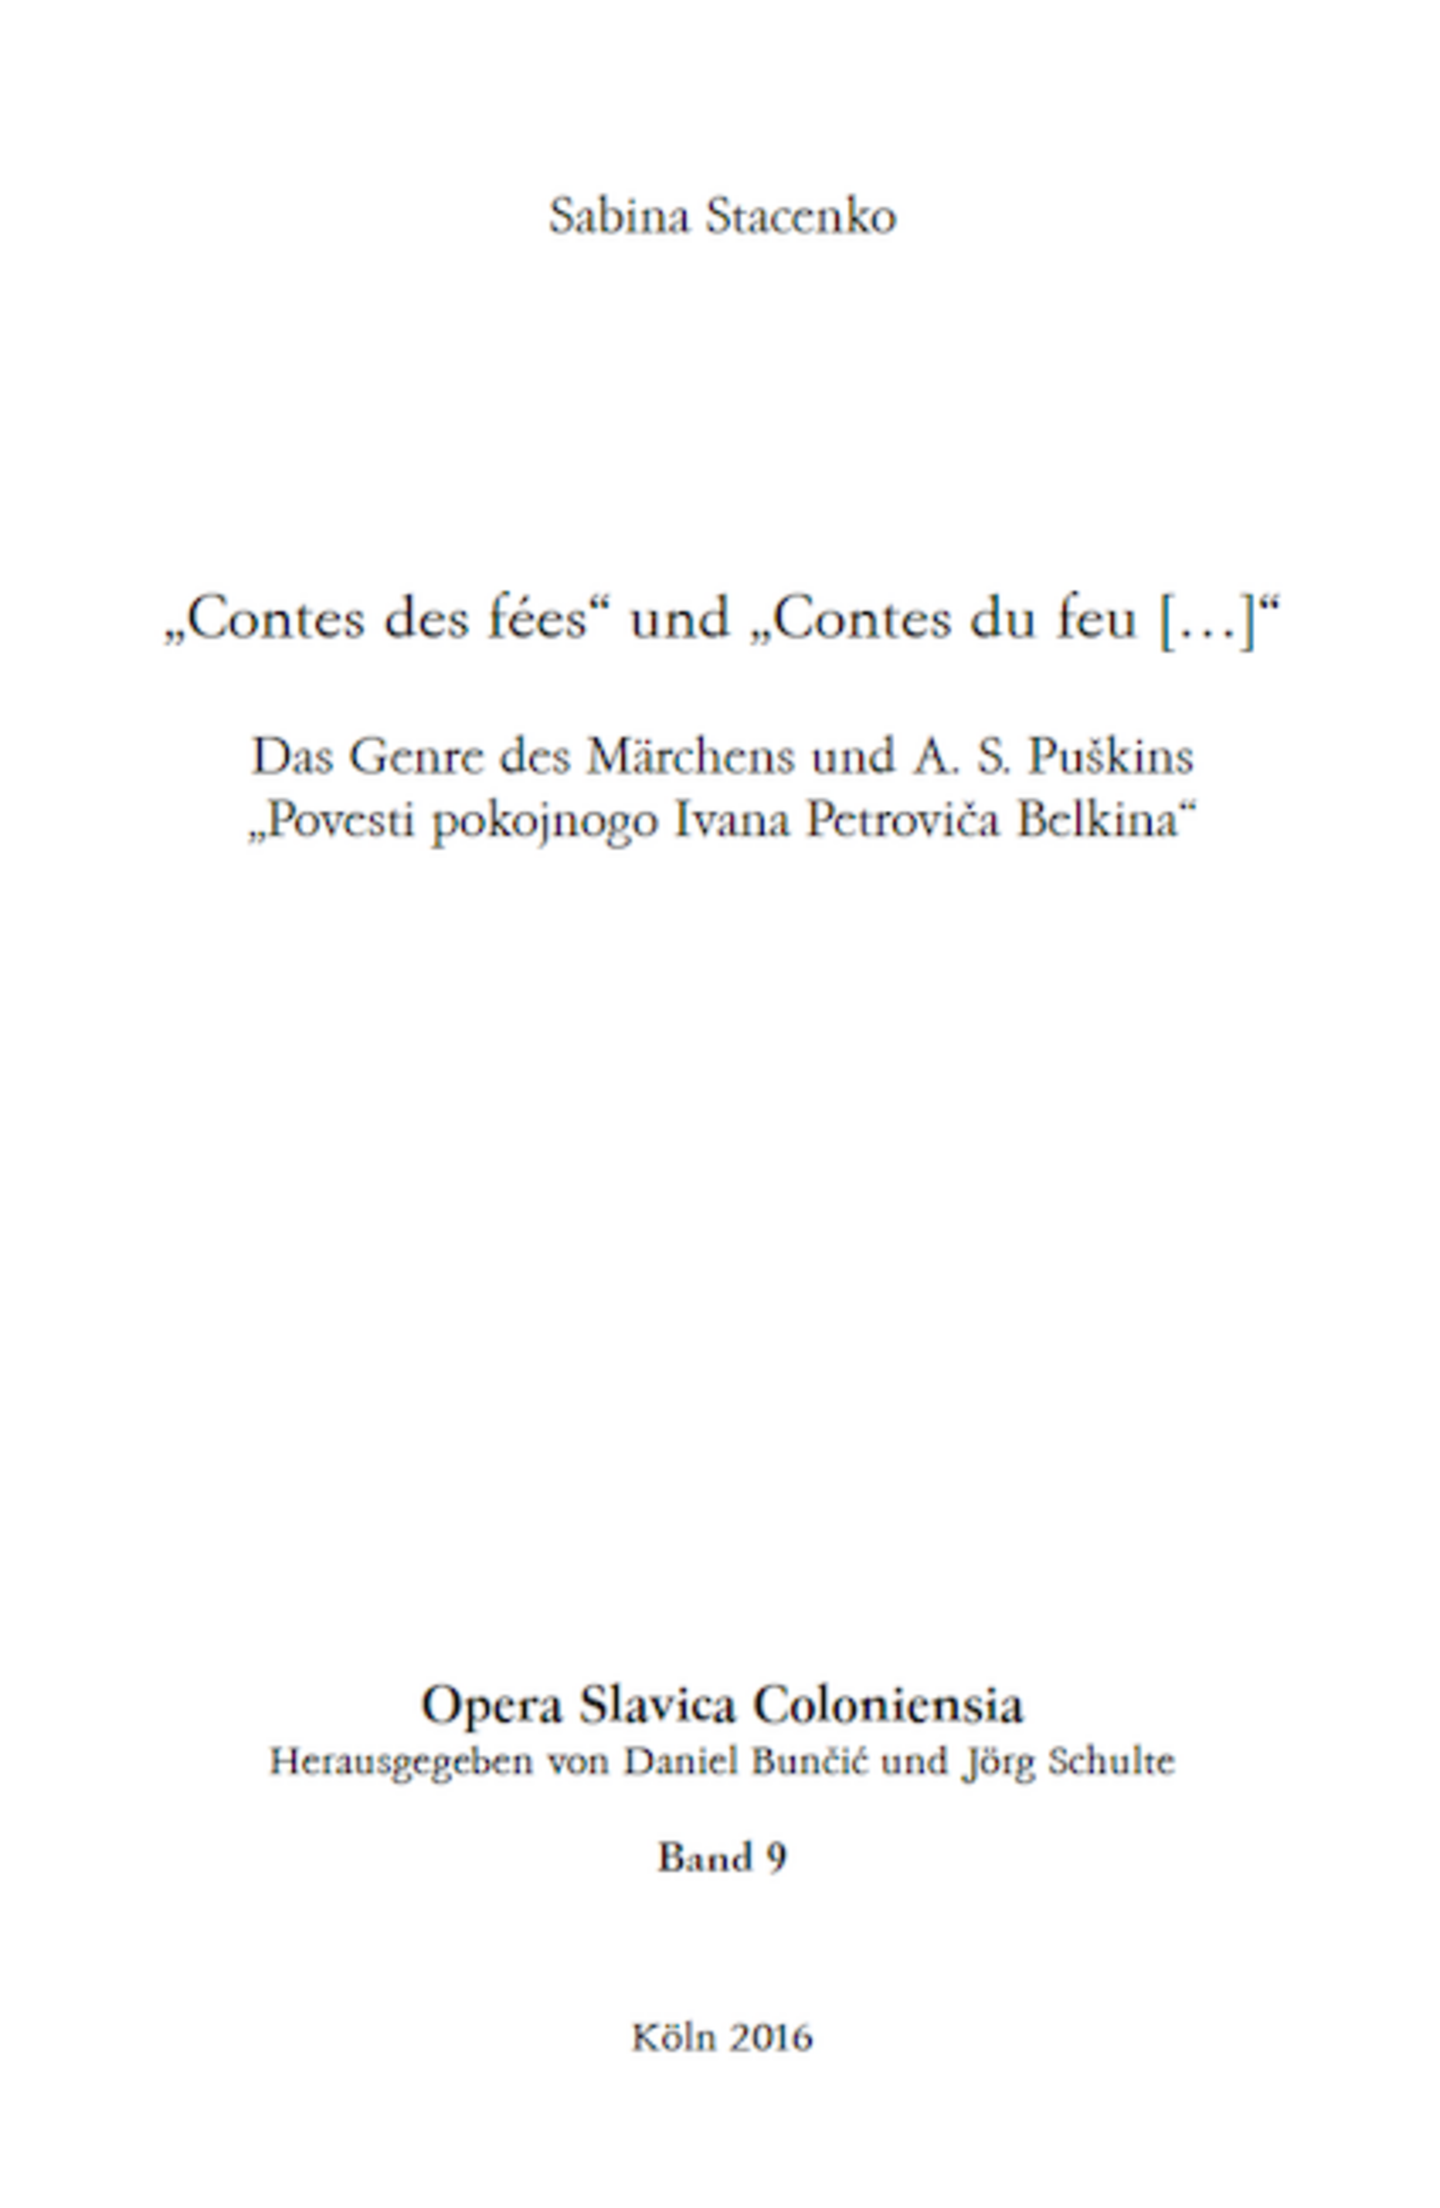 Opera Slavica Coloniensia, Bd. 9: Sabina Stacenko (2017) „Contes des fées“ und „Contes du feu […]“ Das Genre des Märchens und A. S. Puškins „Povesti pokojnogo Ivana Petroviča Belkina“